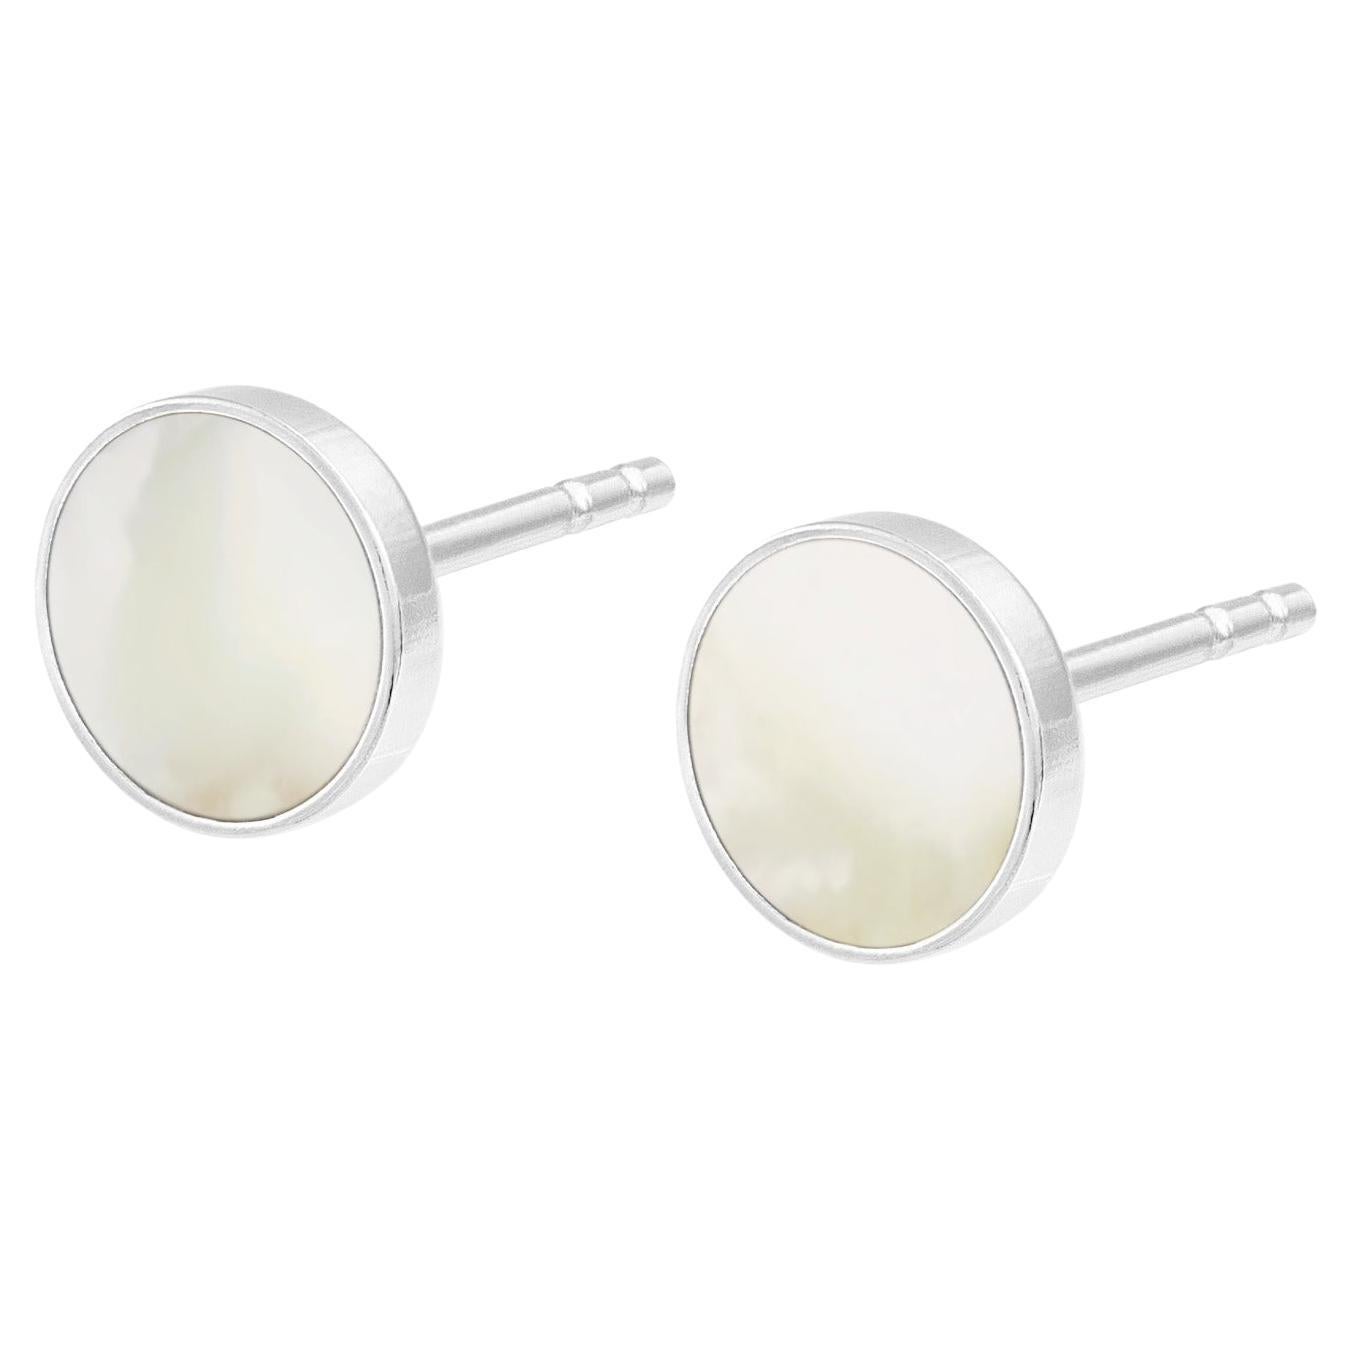 Delicate silver opal stud earrings - minimal elegance For Sale